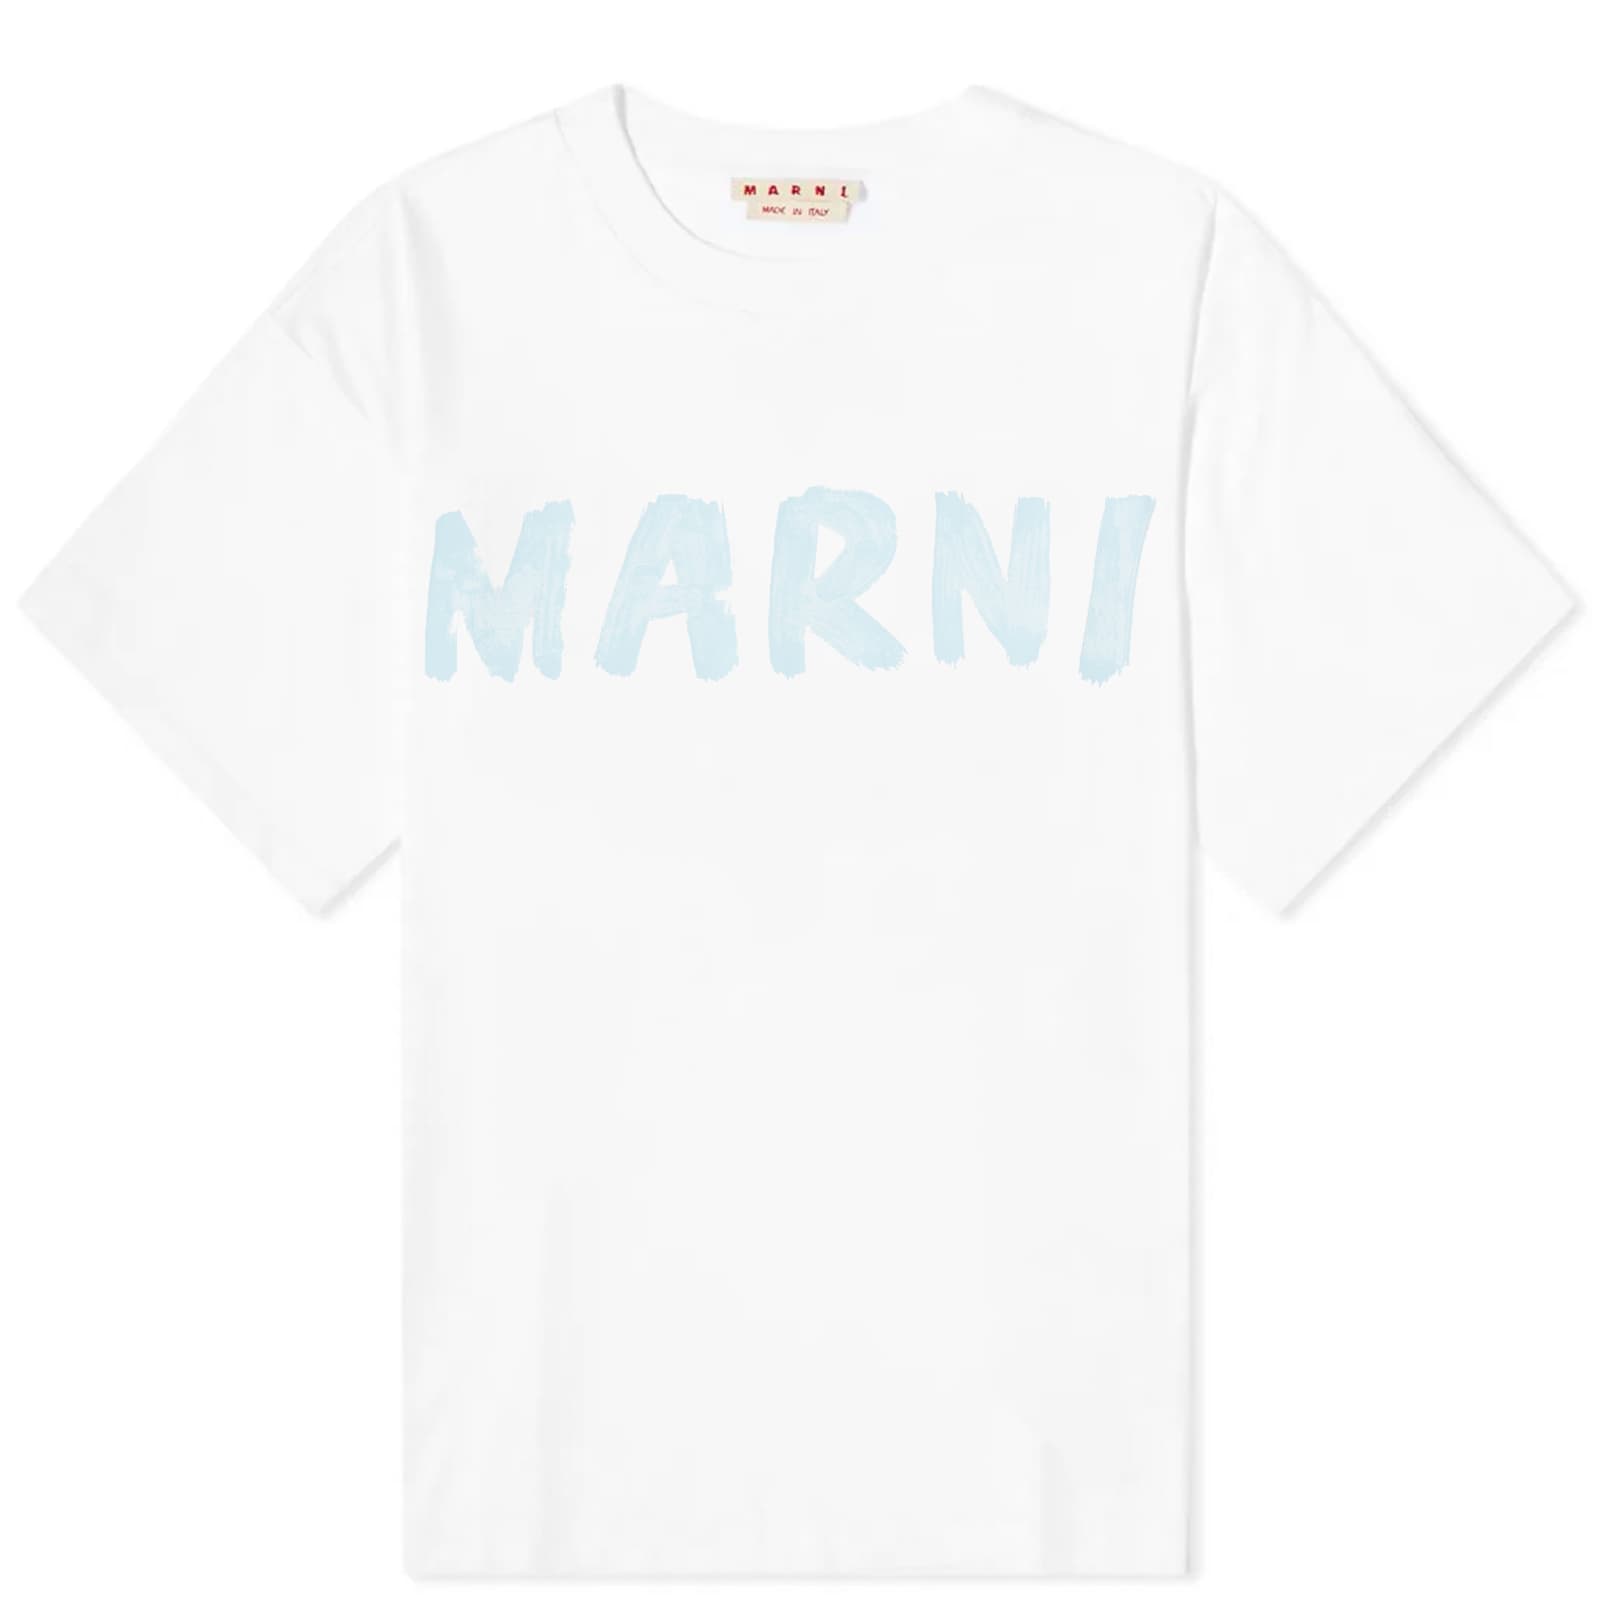 Футболка Marni Large Logo, цвет Lily White футболка marni flower word puzzle цвет lily white